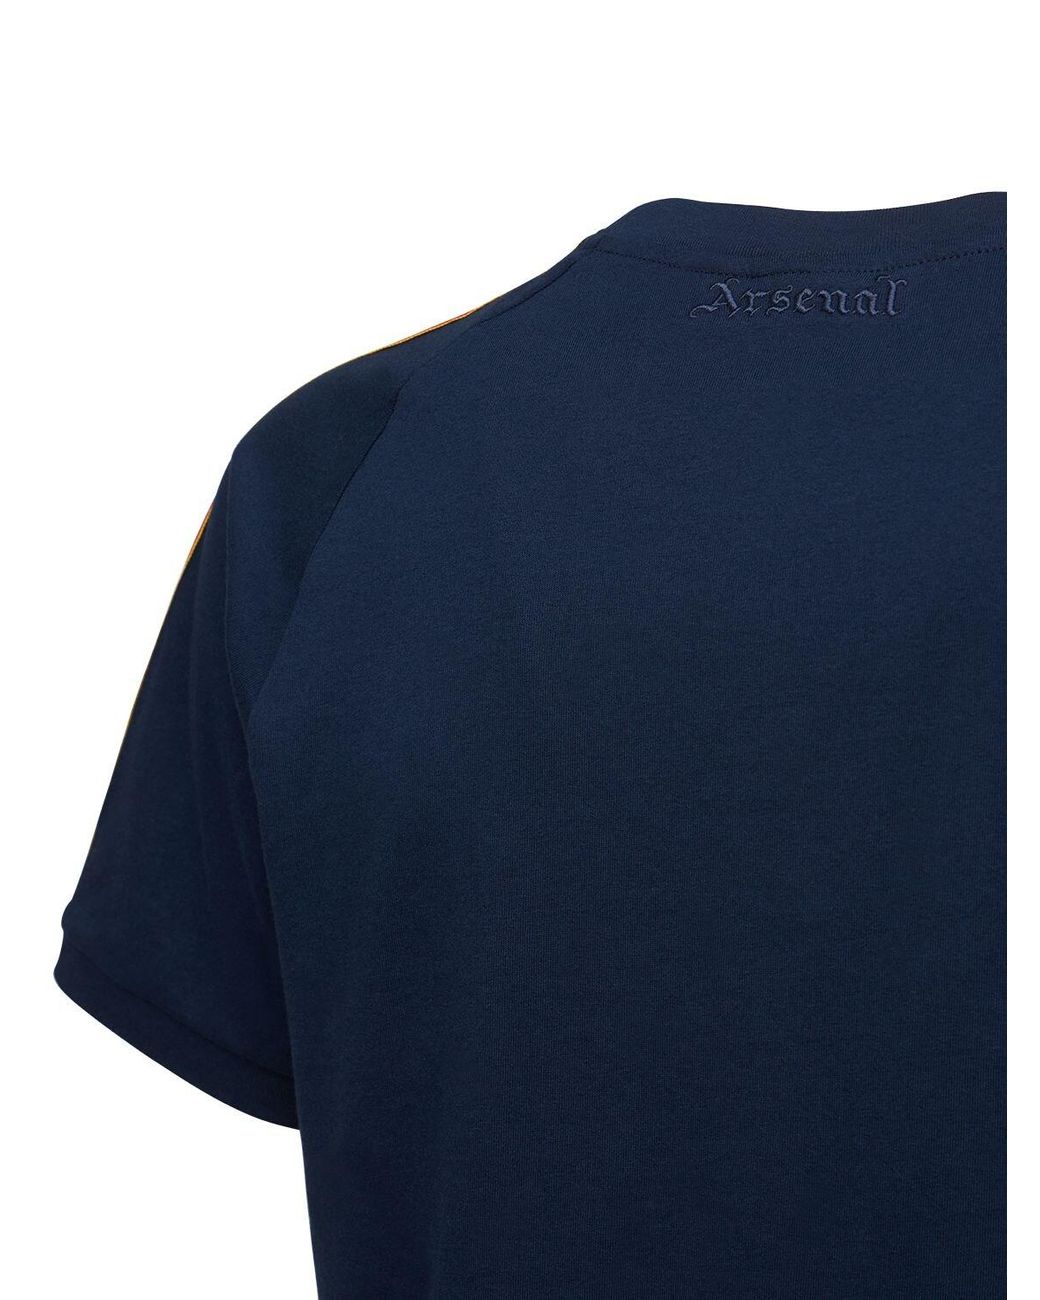 adidas Originals Arsenal 3-stripes T-shirt in Blue for Men | Lyst